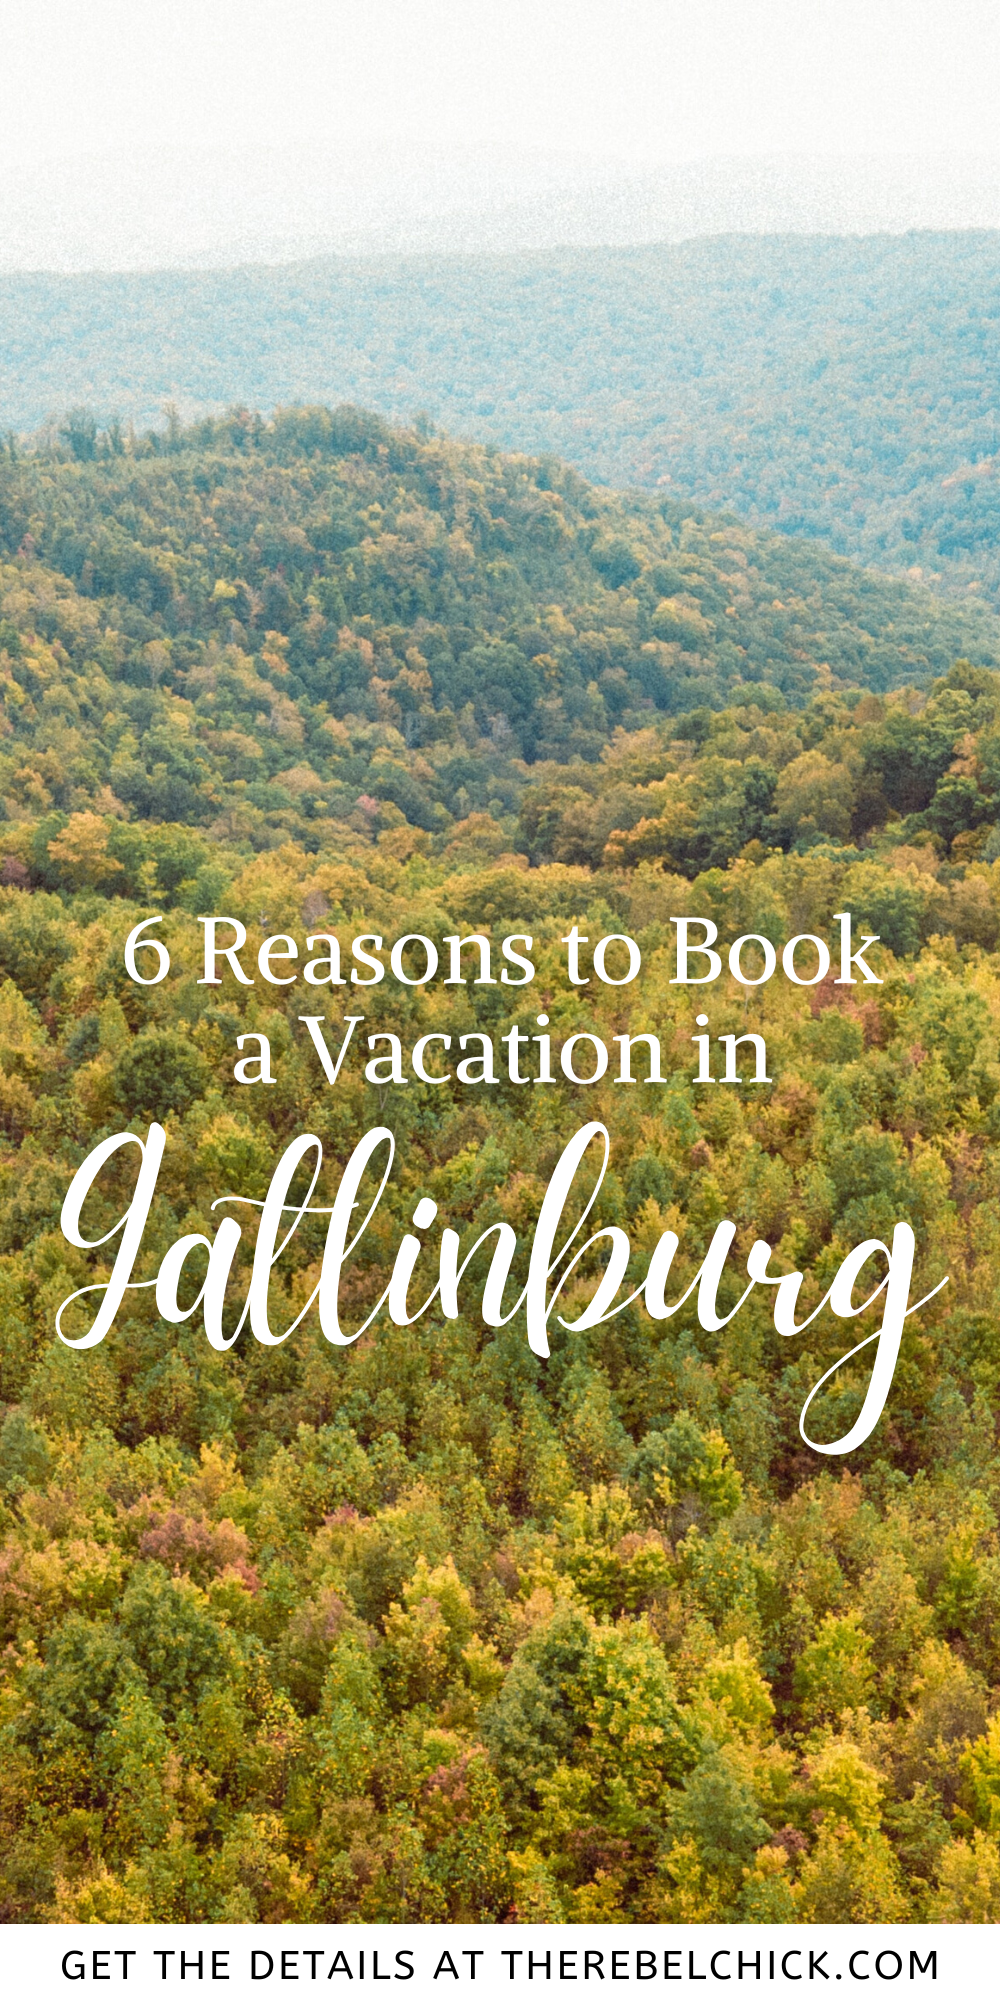 Gatlinburg Tennessee Vacations